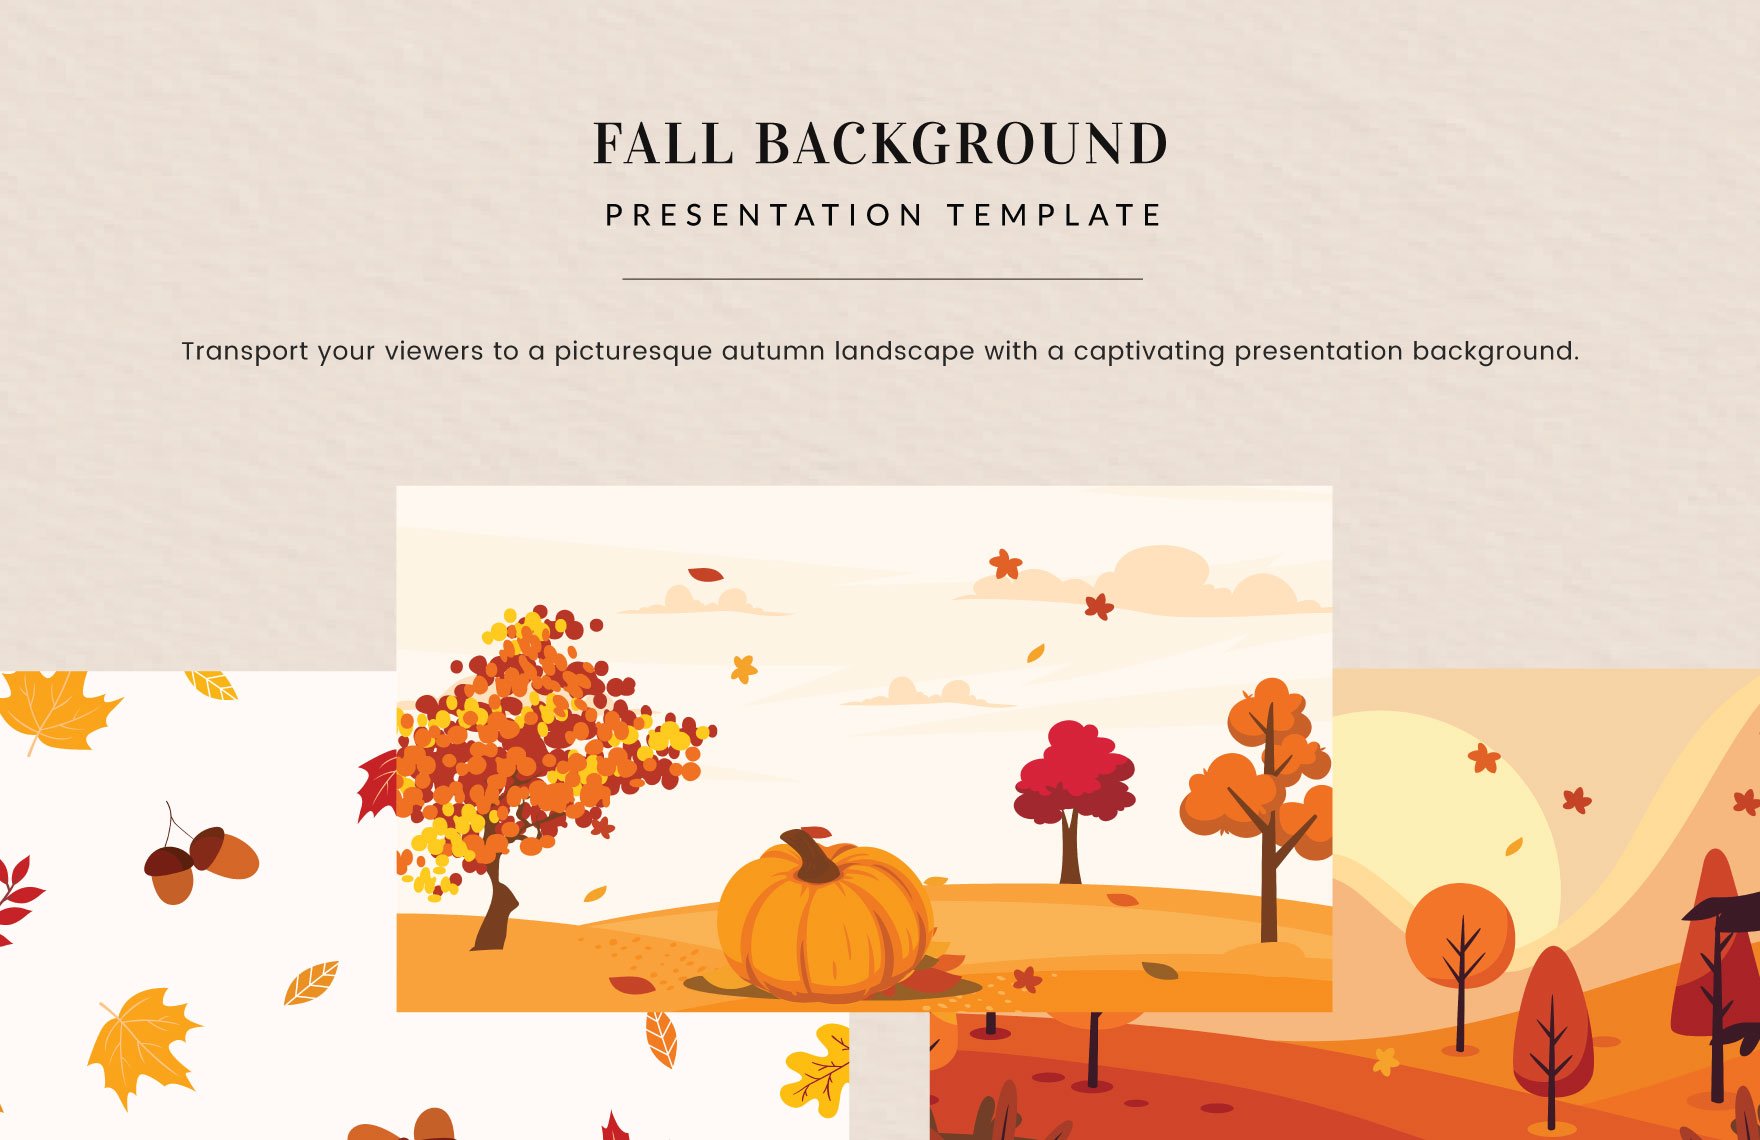  Fall Background Presentation